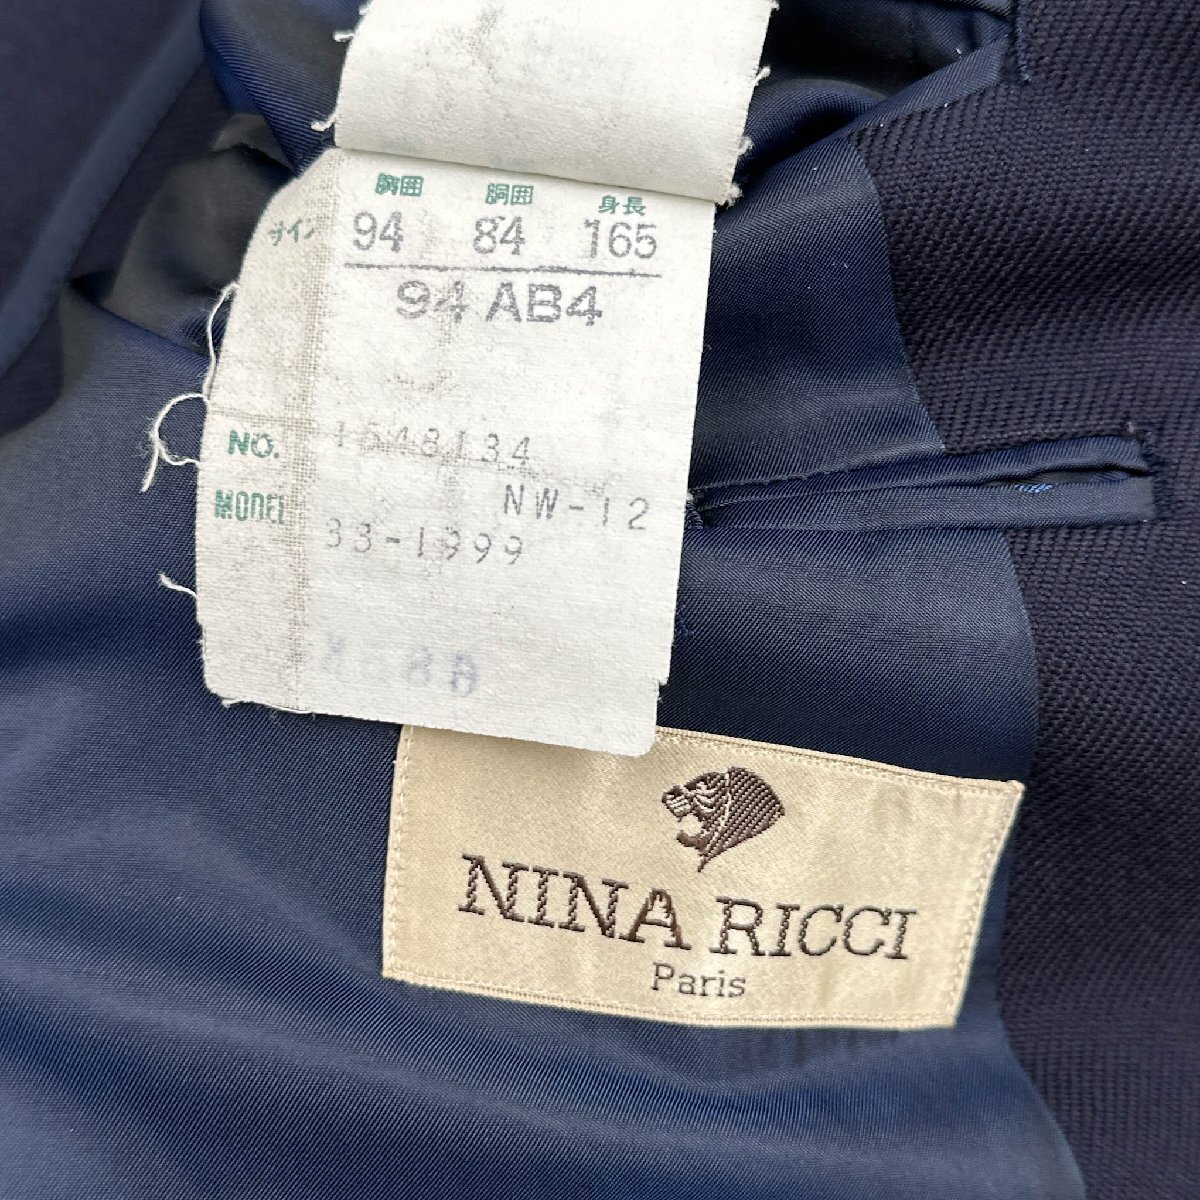 NINA RICCI ニナリッチ 銀ボタン ダブル テーラードジャケット 紺ブレザー 94-84-165 94AB4 / ネイビー 濃紺 メンズ_画像5